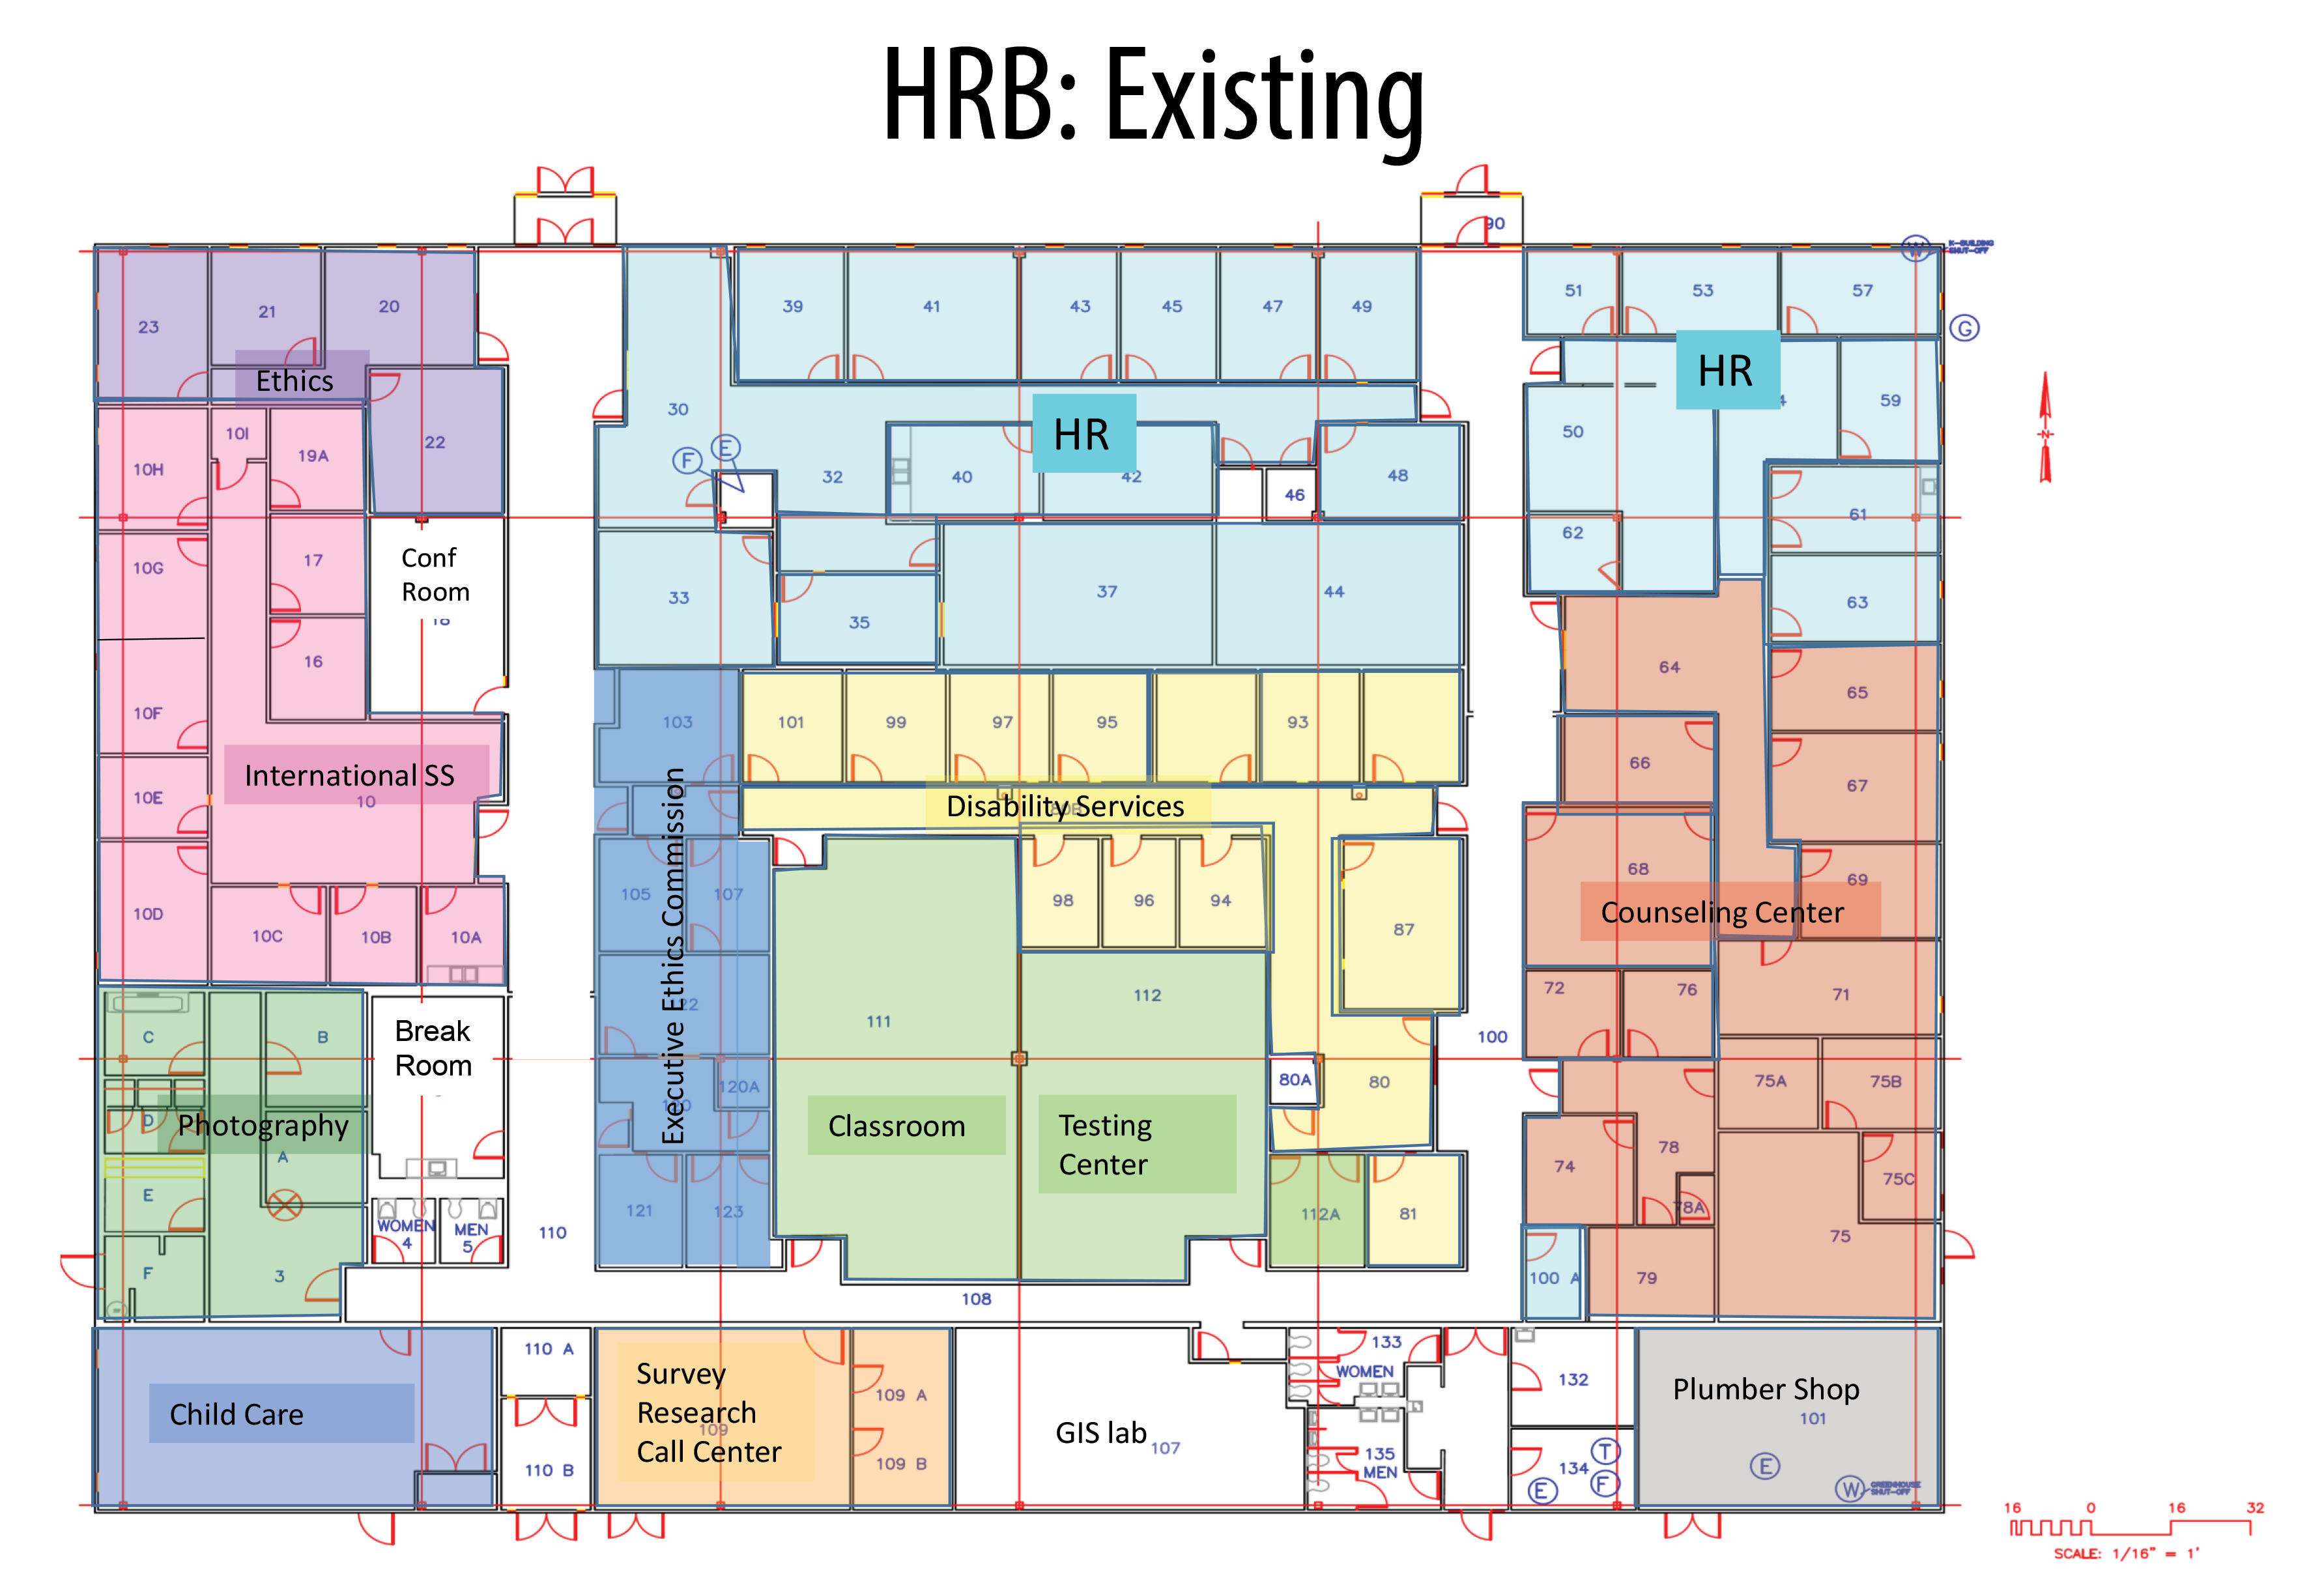 HRB Blueprint - Existing